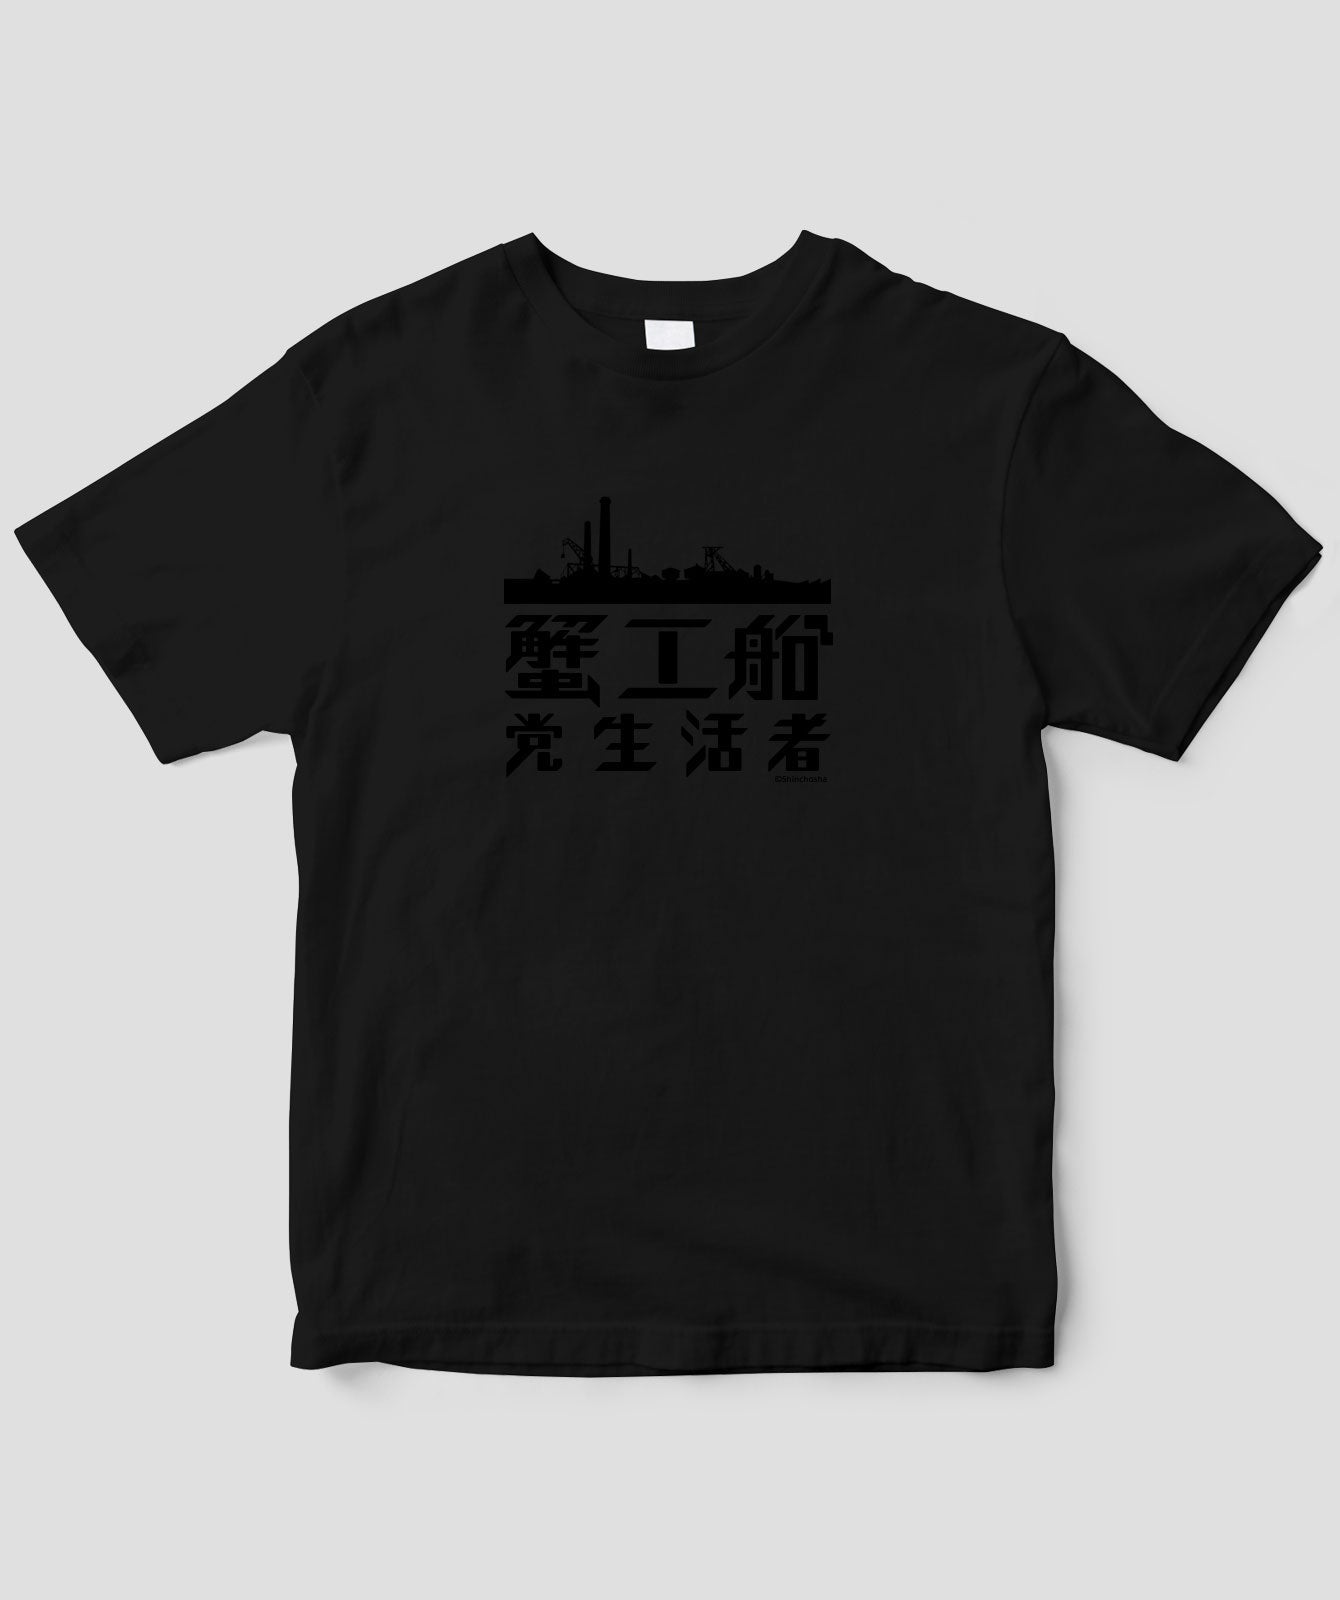 蟹工船 / ロゴT TypeB 黒×黒 / 新潮社